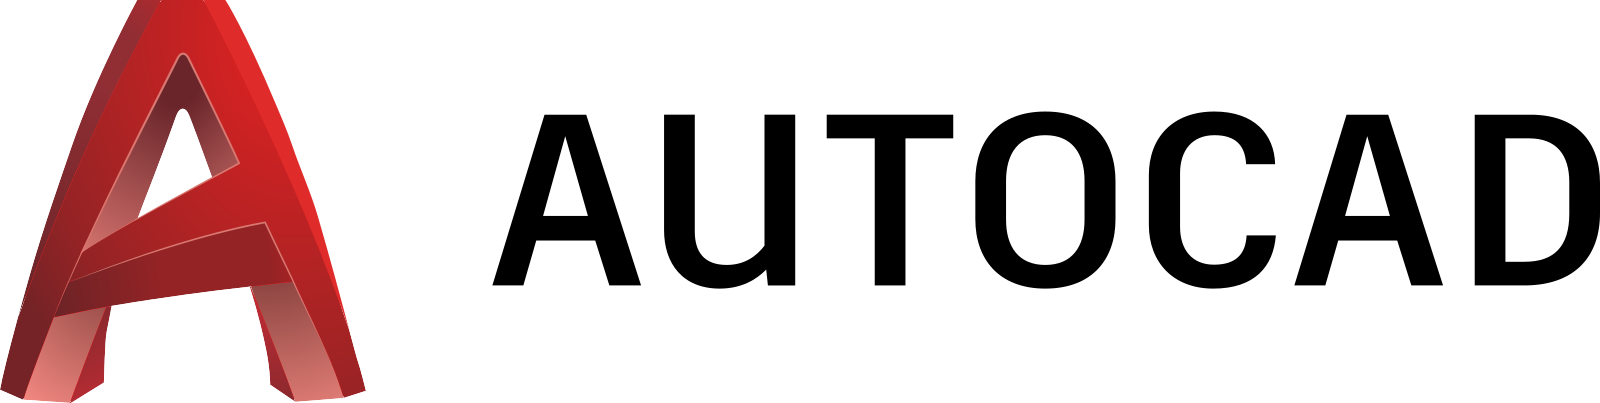 Autocad Logo.